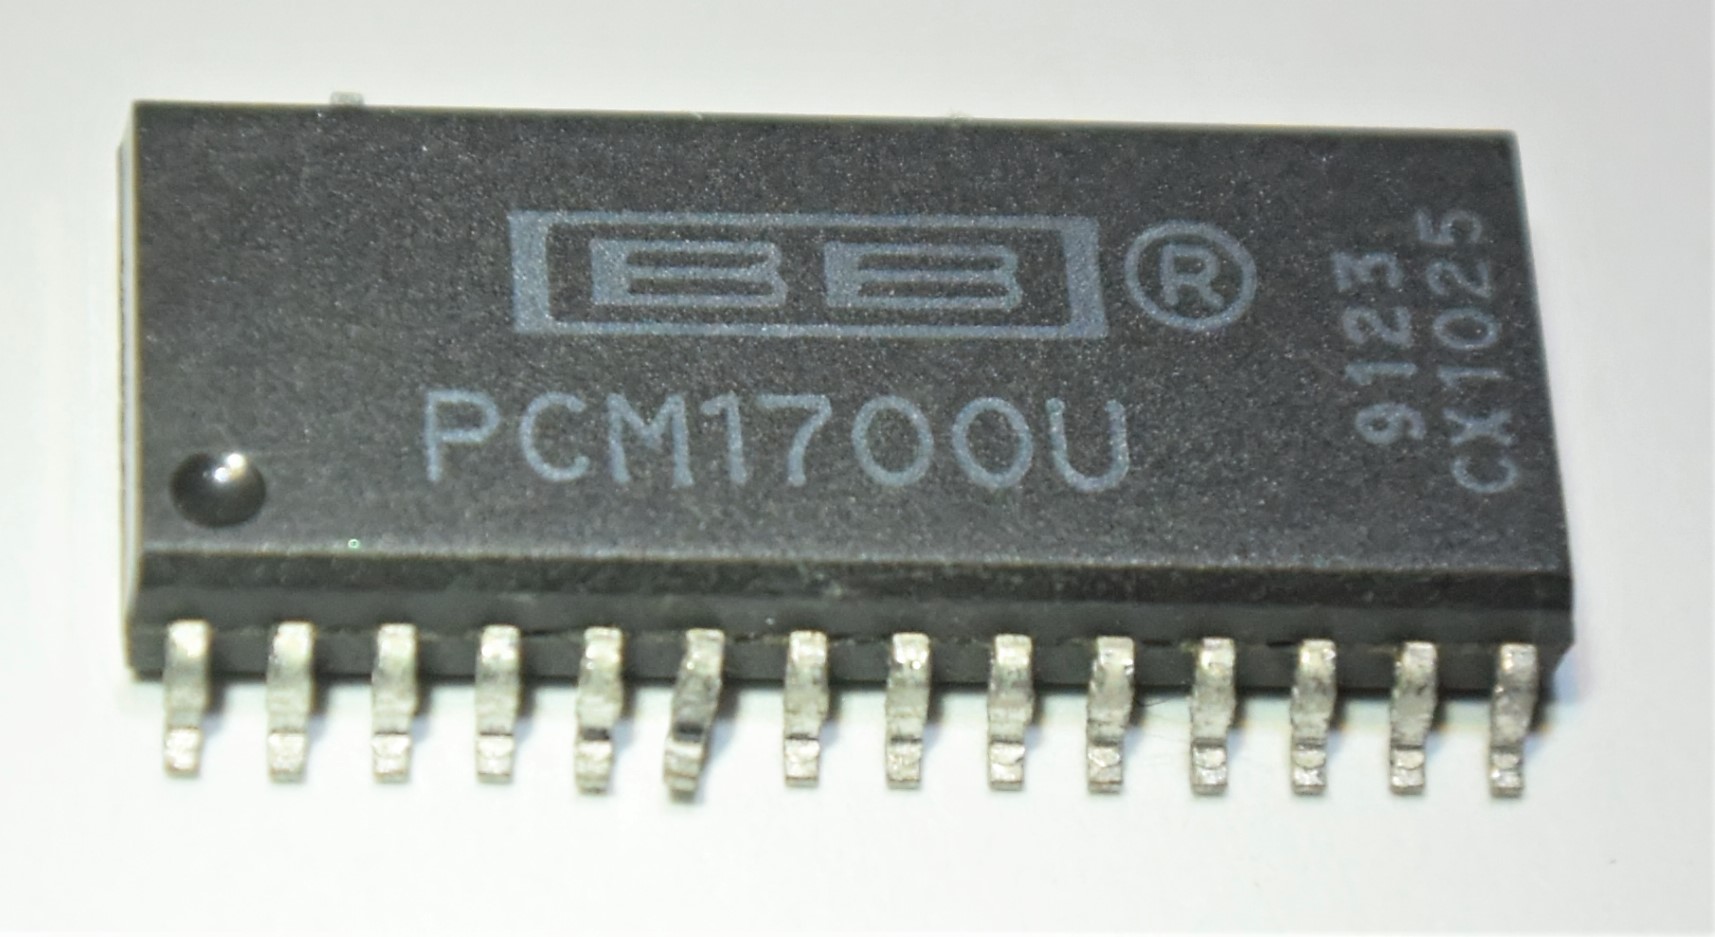 PCM1700U　Dual 18-Bit Monolithic Audio　DIGITAL-TO-ANALOG CONVERTER